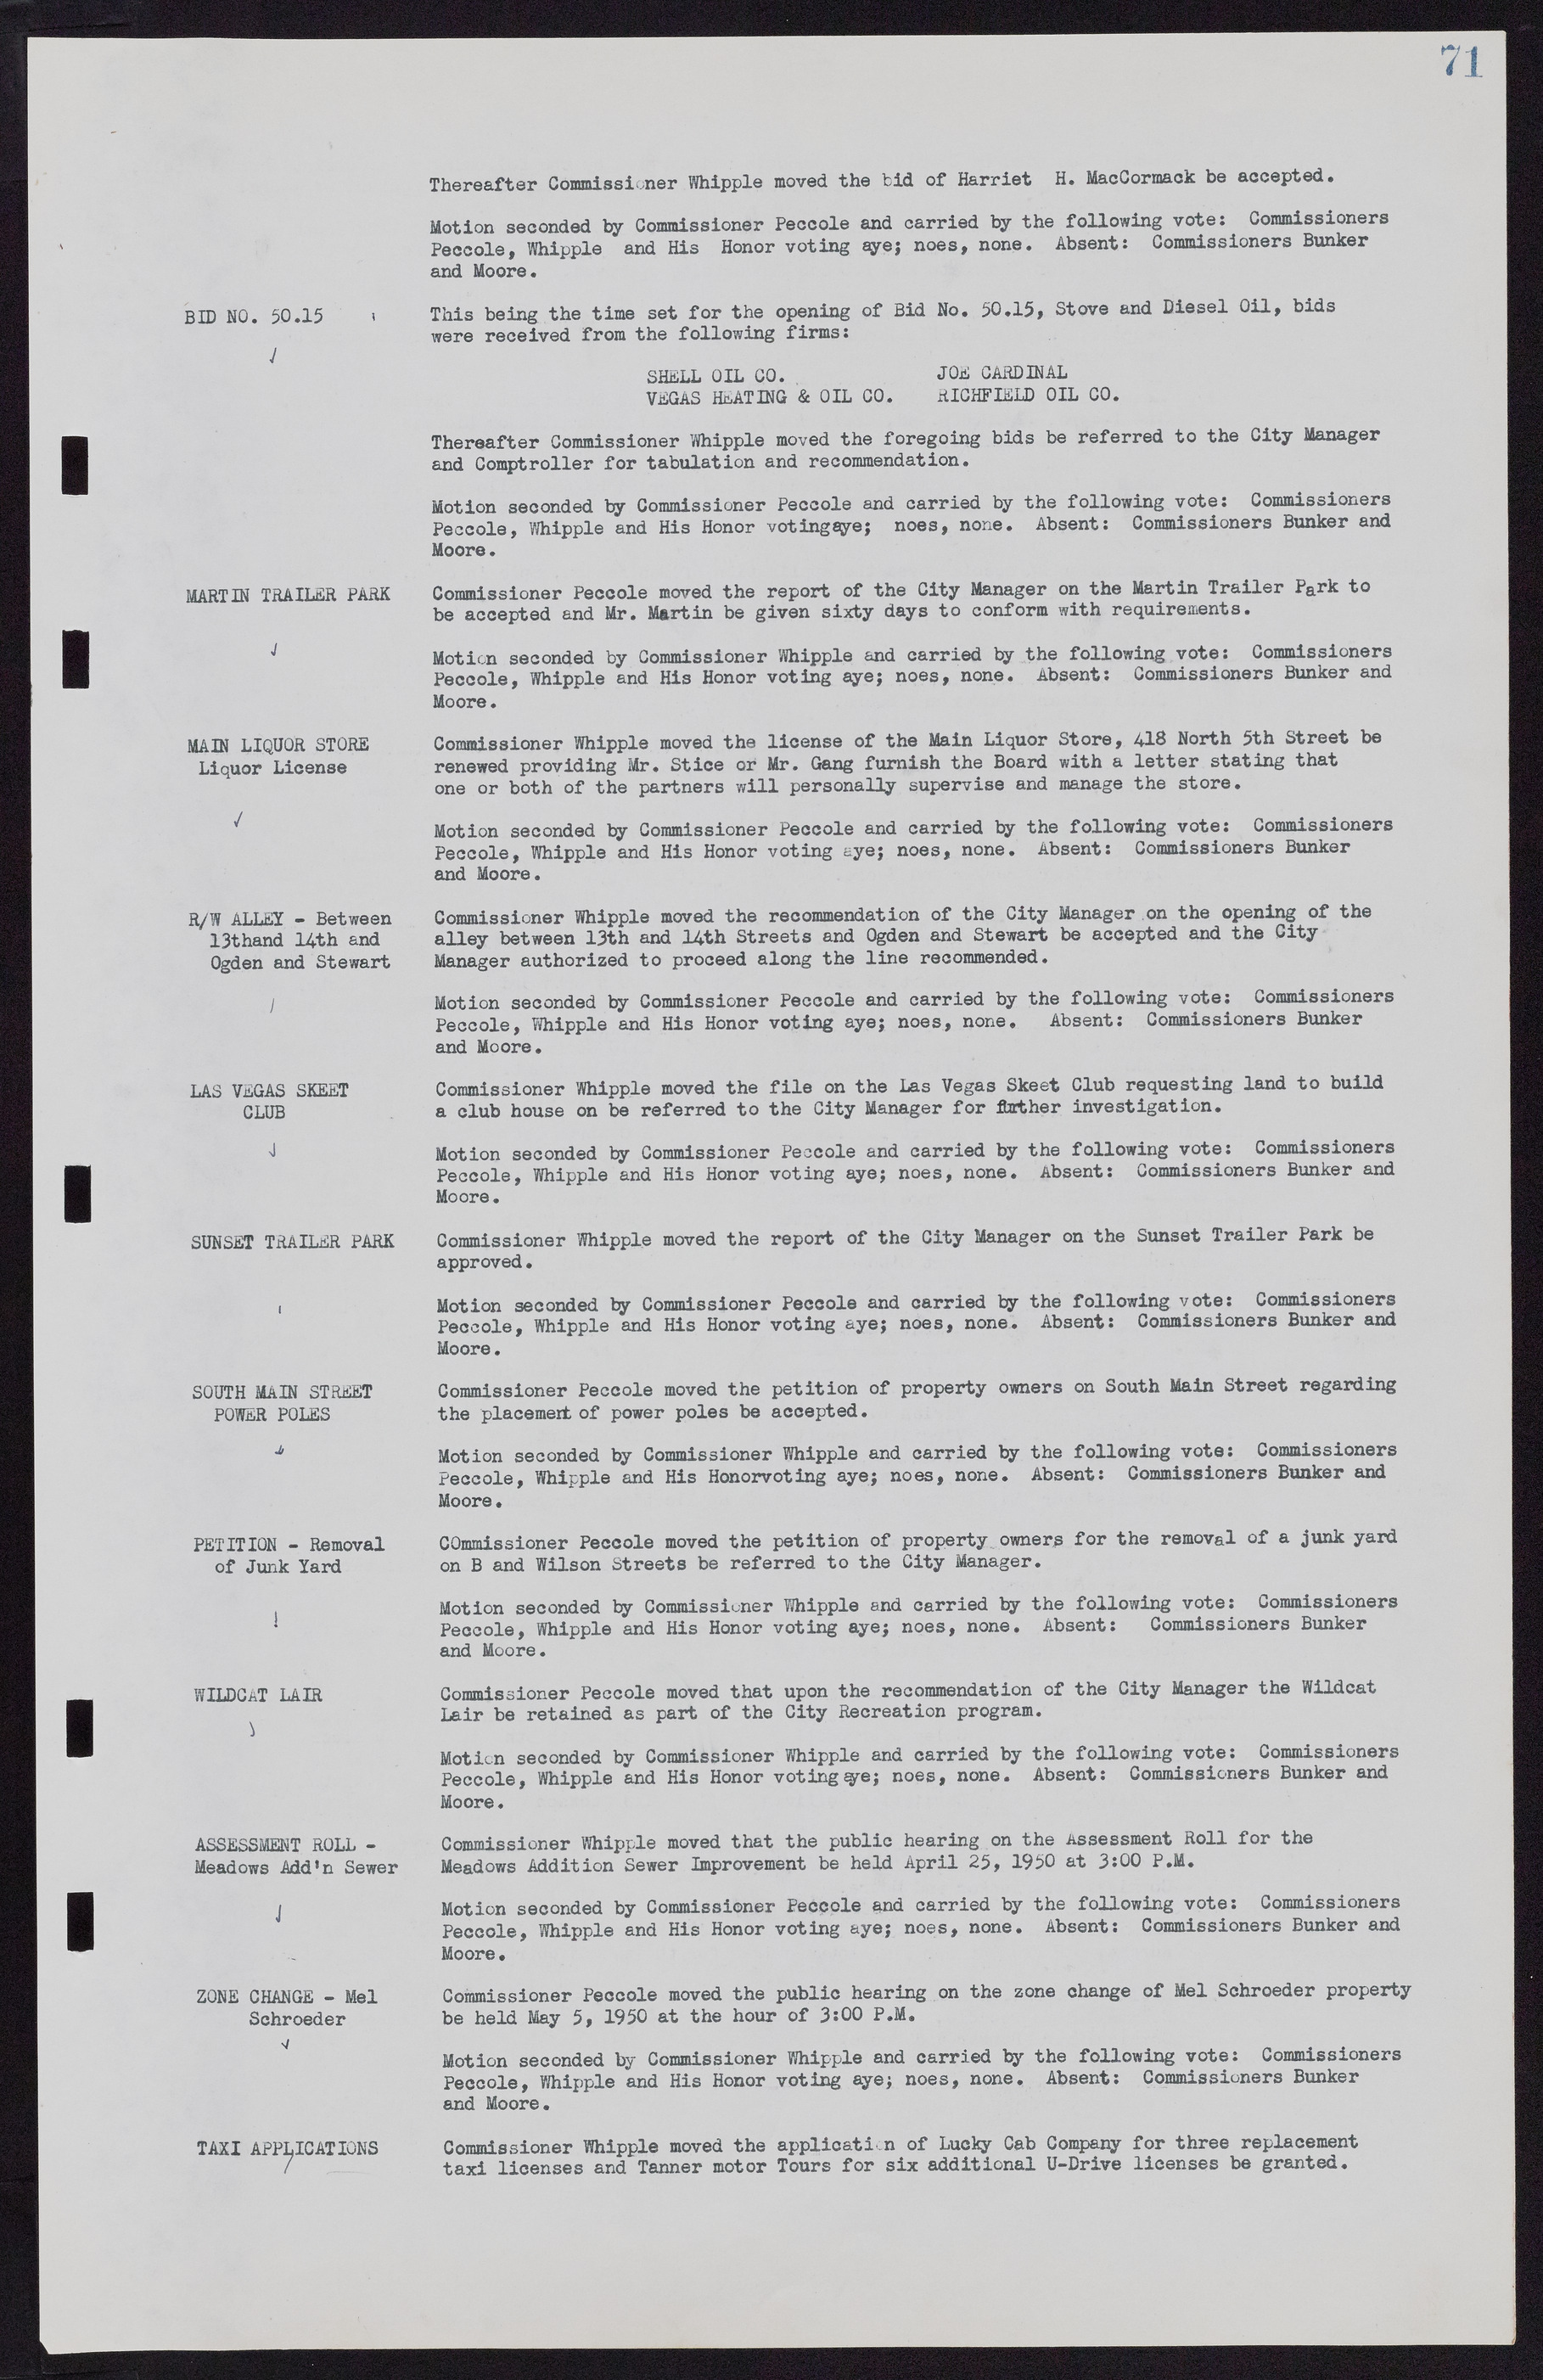 Las Vegas City Commission Minutes, November 7, 1949 to May 21, 1952, lvc000007-79